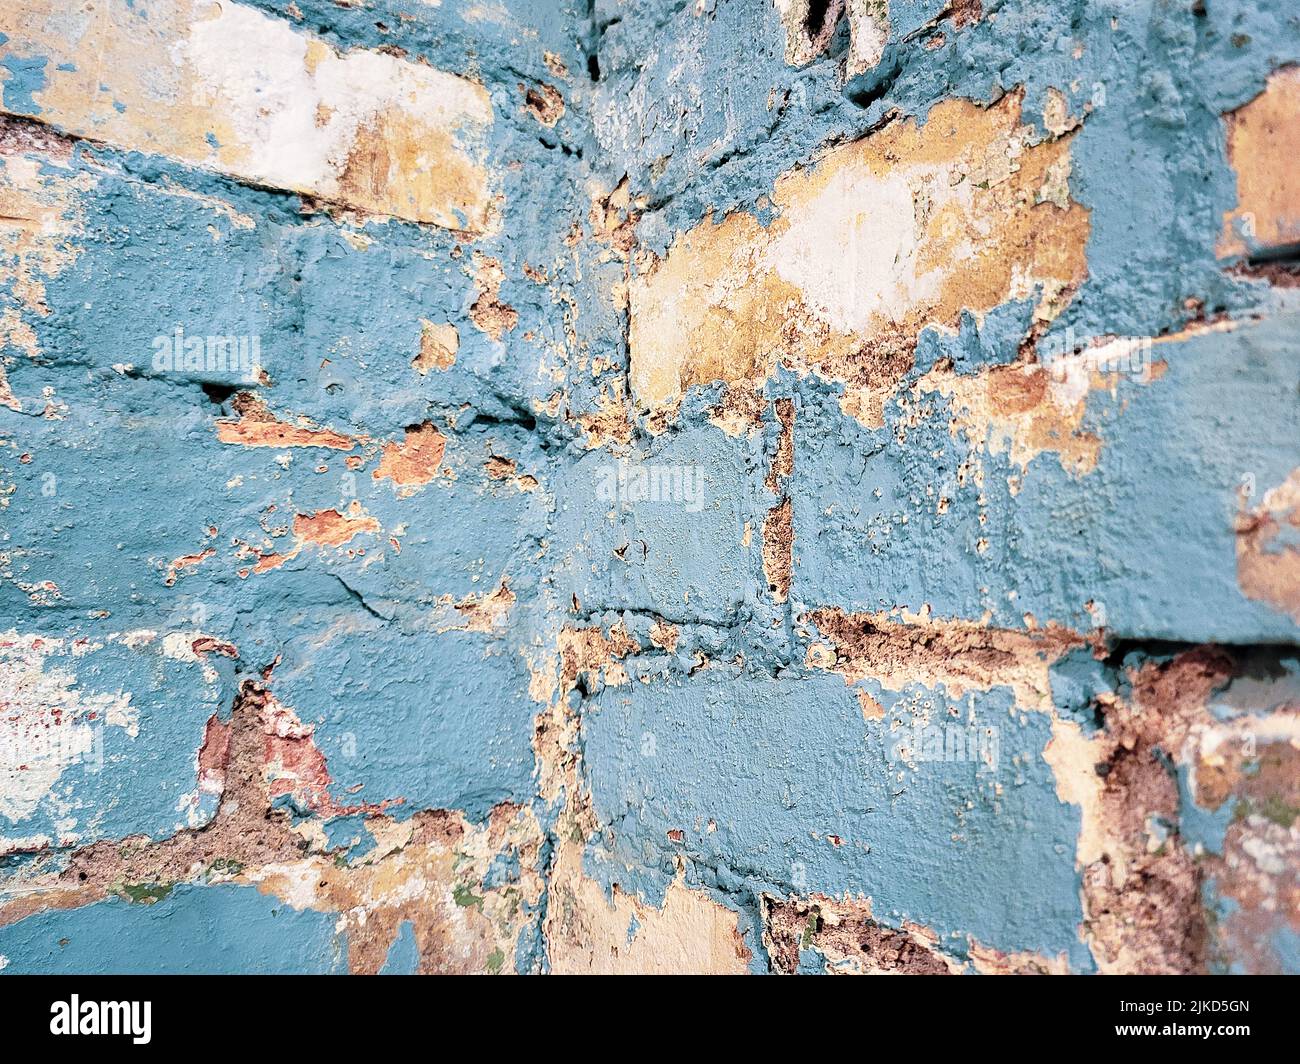 Cerca de pintura azul descolorida en la pared de ladrillo de la esquina Foto de stock